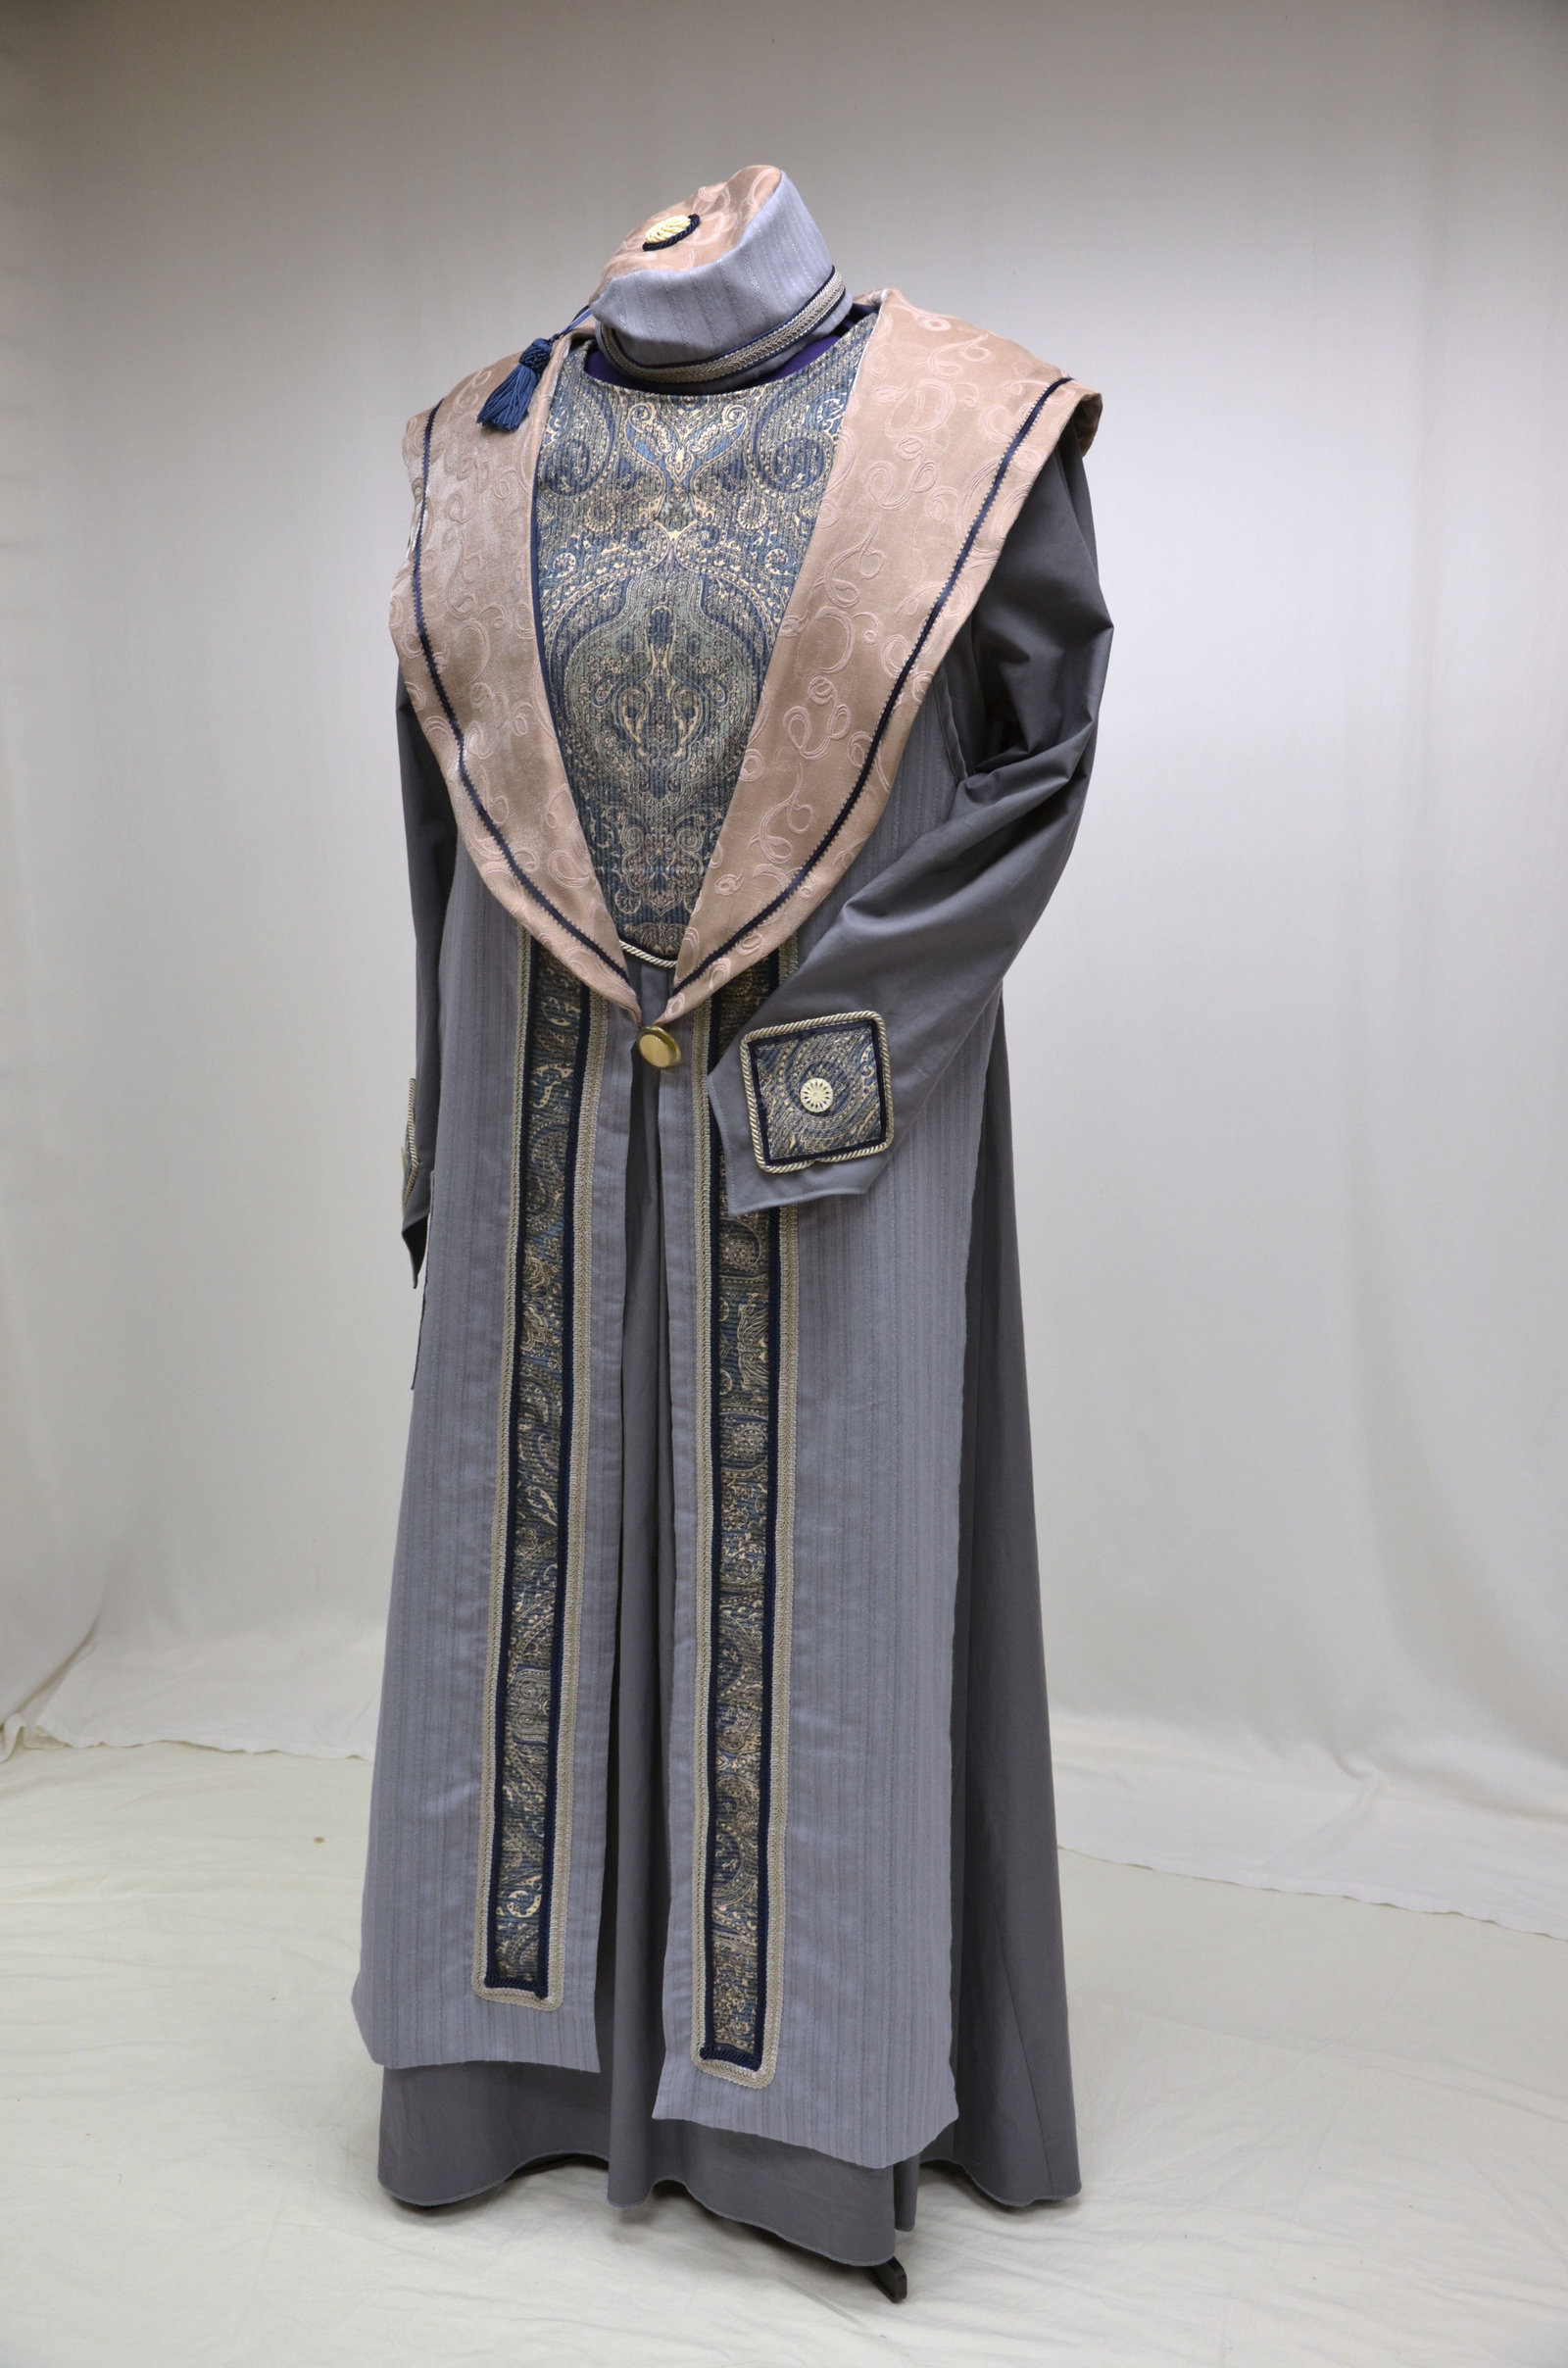 Robes of Sarenrae | Caleb's Pathfinder Campaign Wiki | FANDOM powered ...